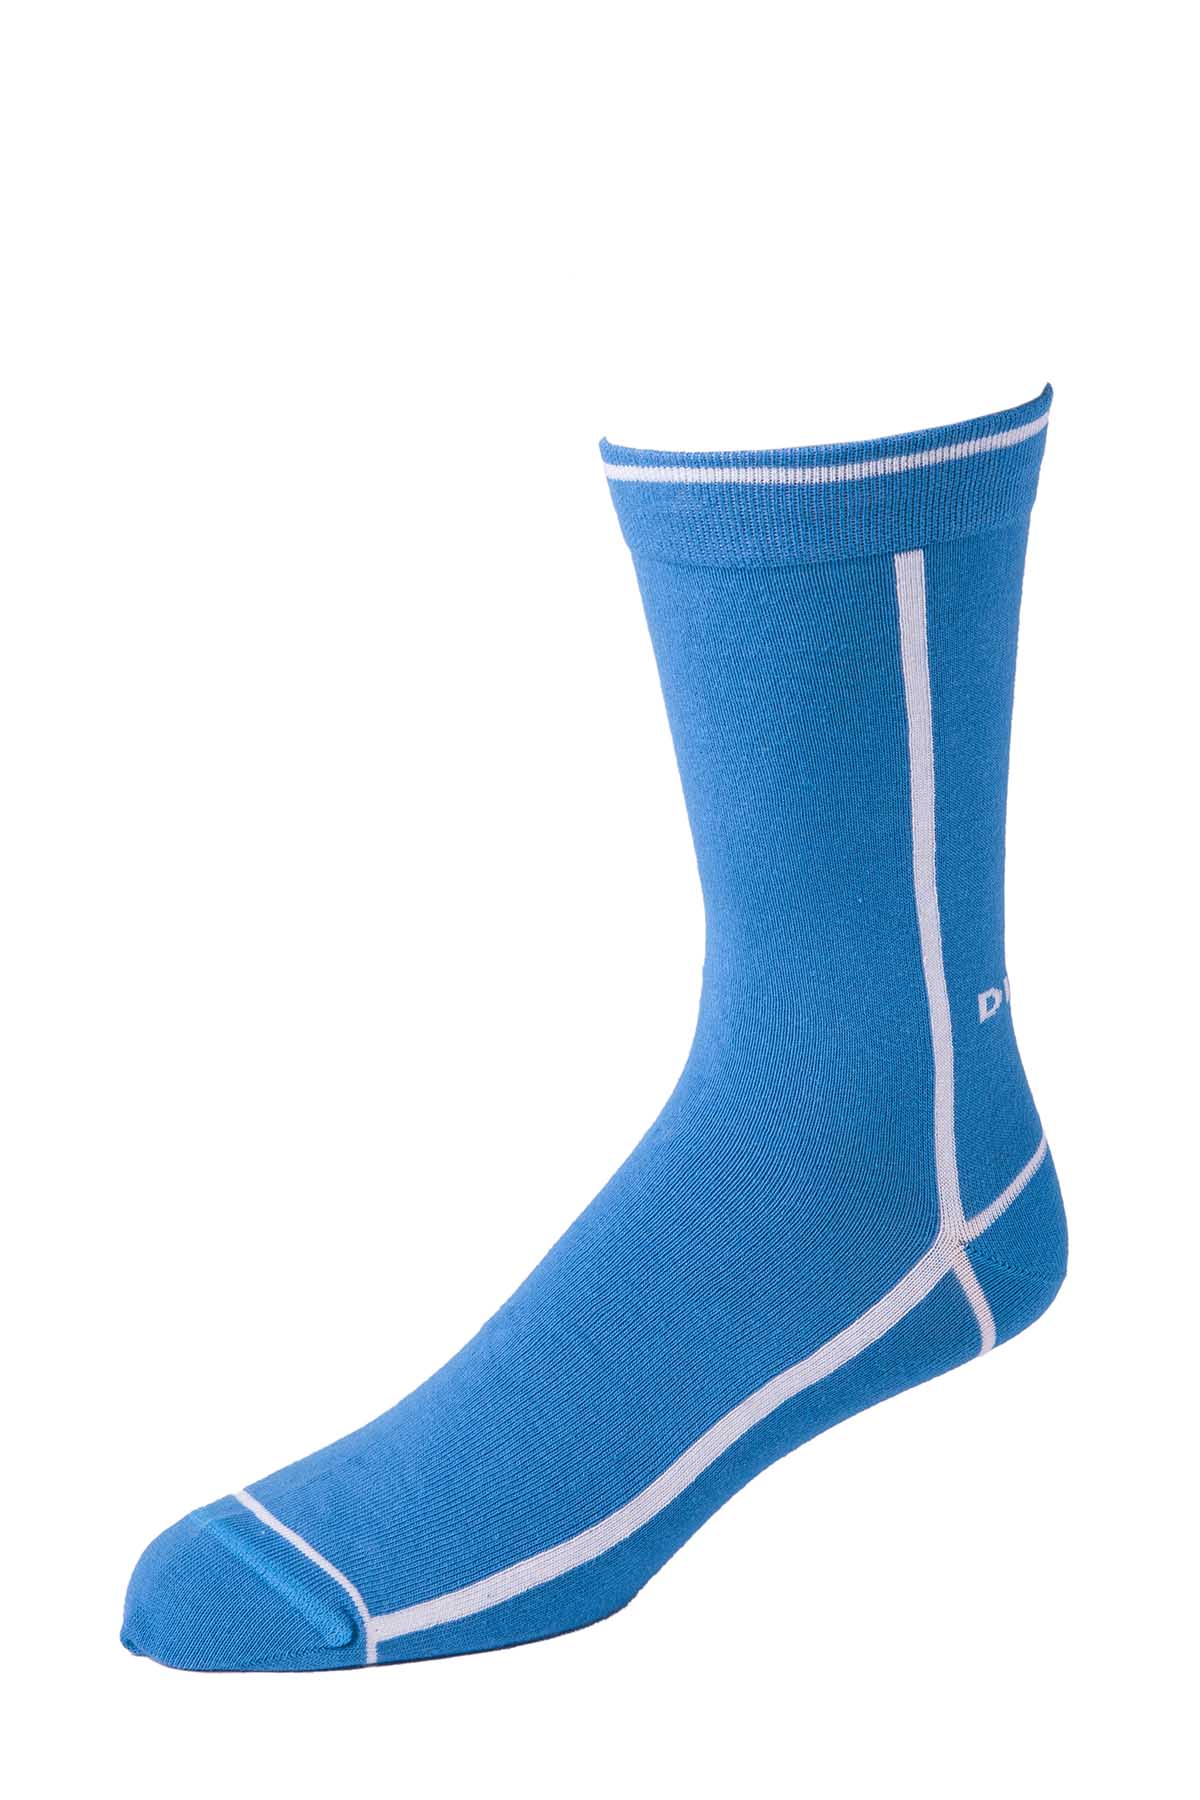 Diesel Blue High Shot Socks